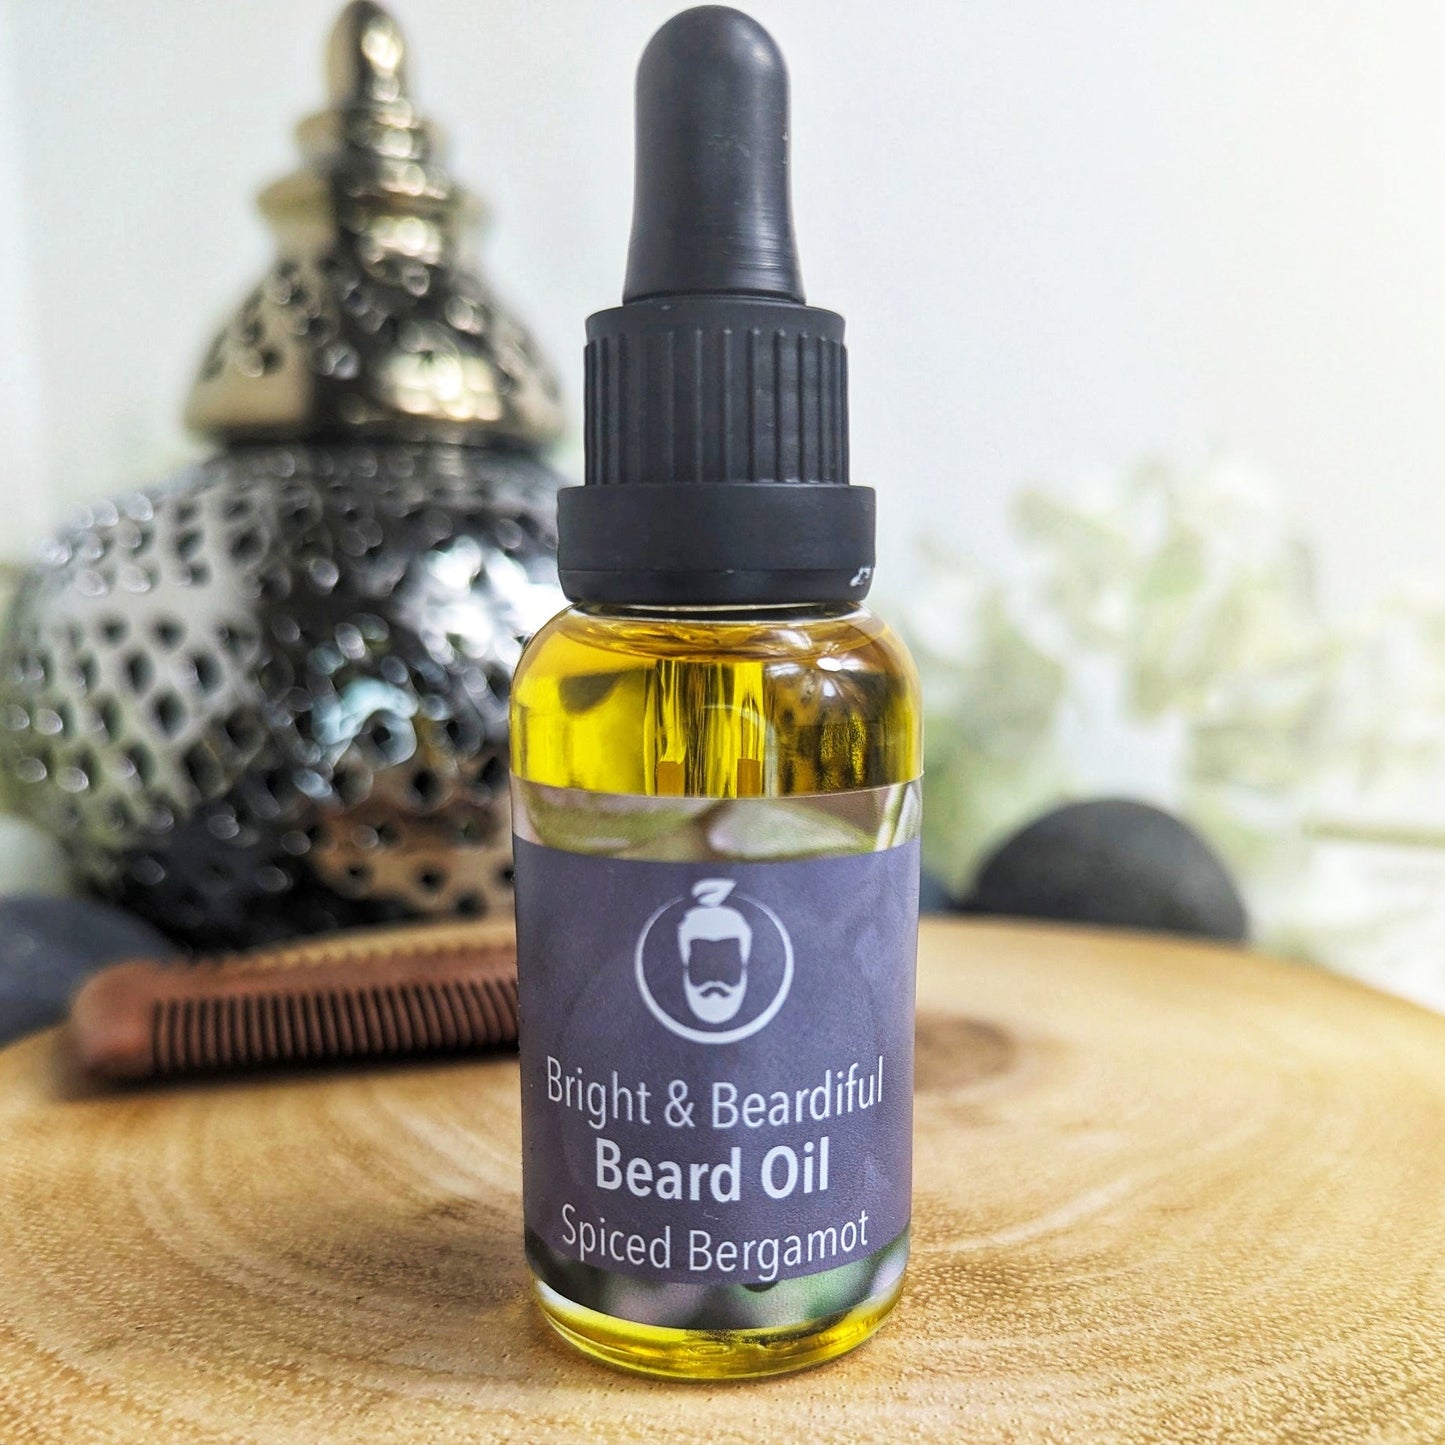 Beardiful Beard Oil - The Full 30ml Set - All 5 Fragrances